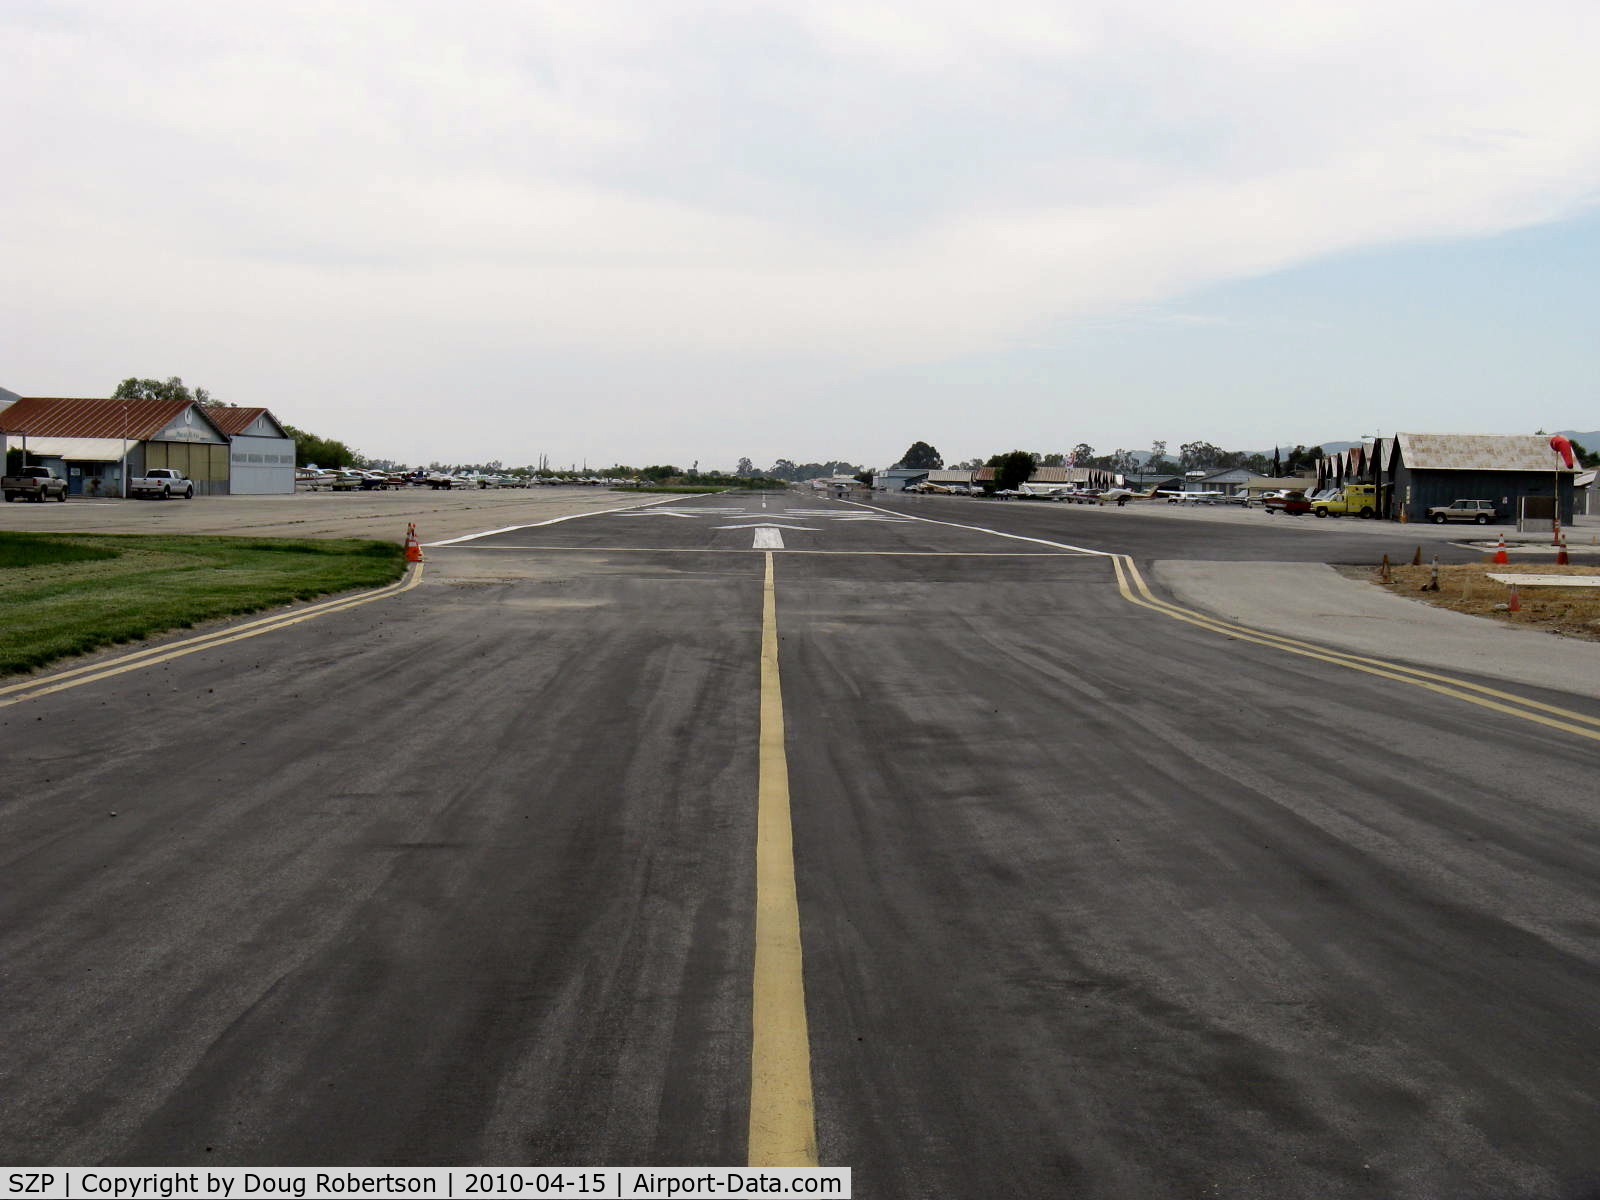 Santa Paula Airport (SZP) - Runway 22, 2,713' by 60' asphalt (displaced threshold 230'), Left-Hand Pattern-Calm Wind Runway. Night Operations Prohibited. CTAF 122.9